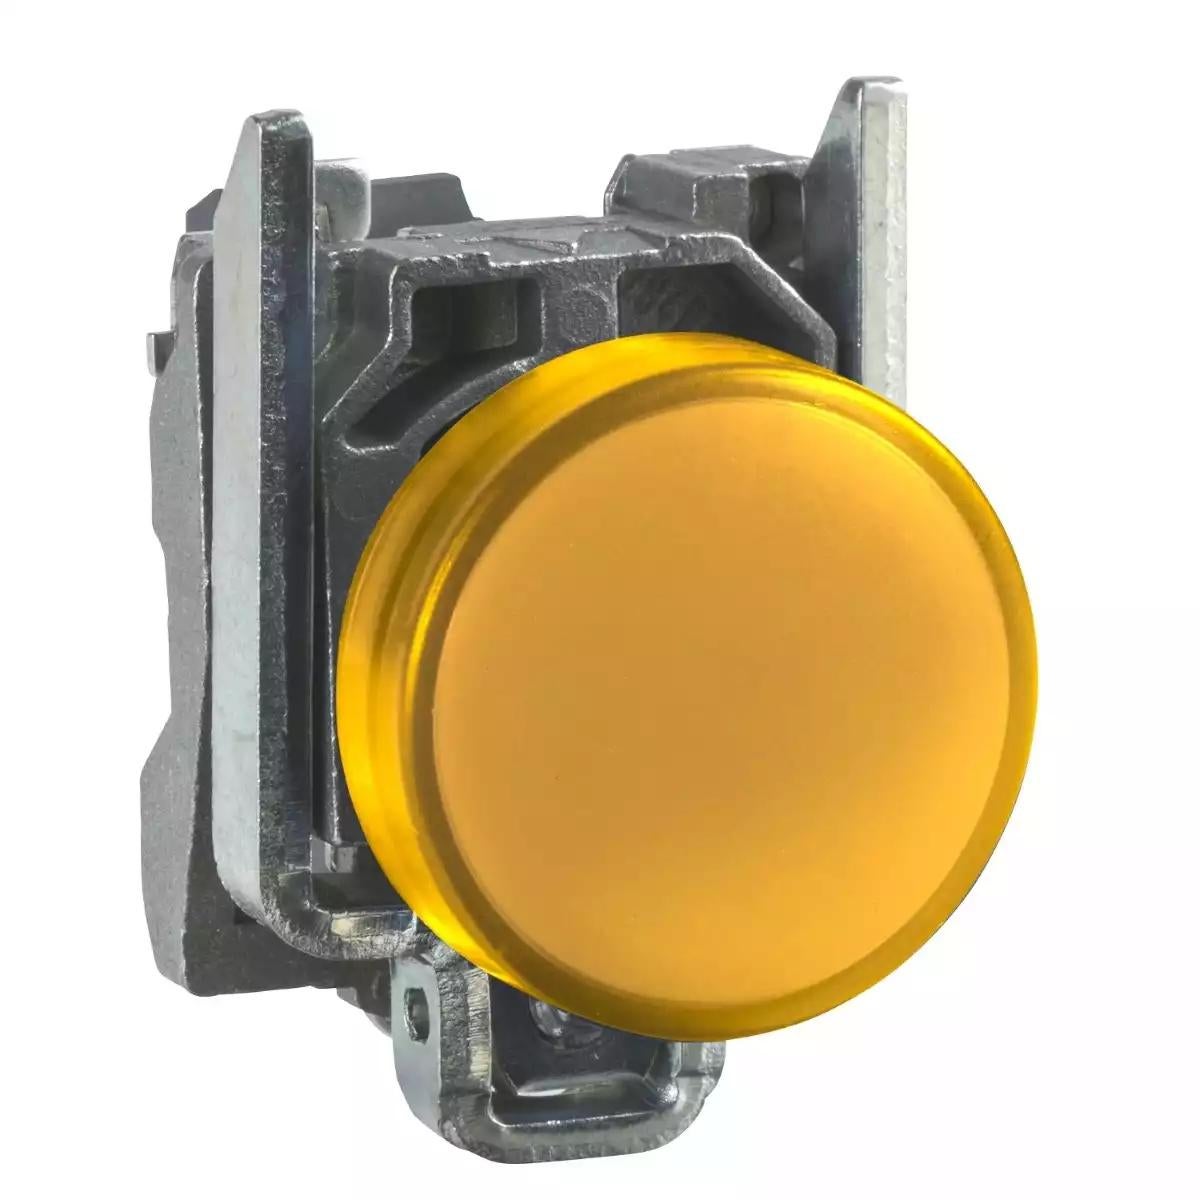 Pilot light, metal, orange, Ø22, plain lens with integral LED, 24 V AC/DC